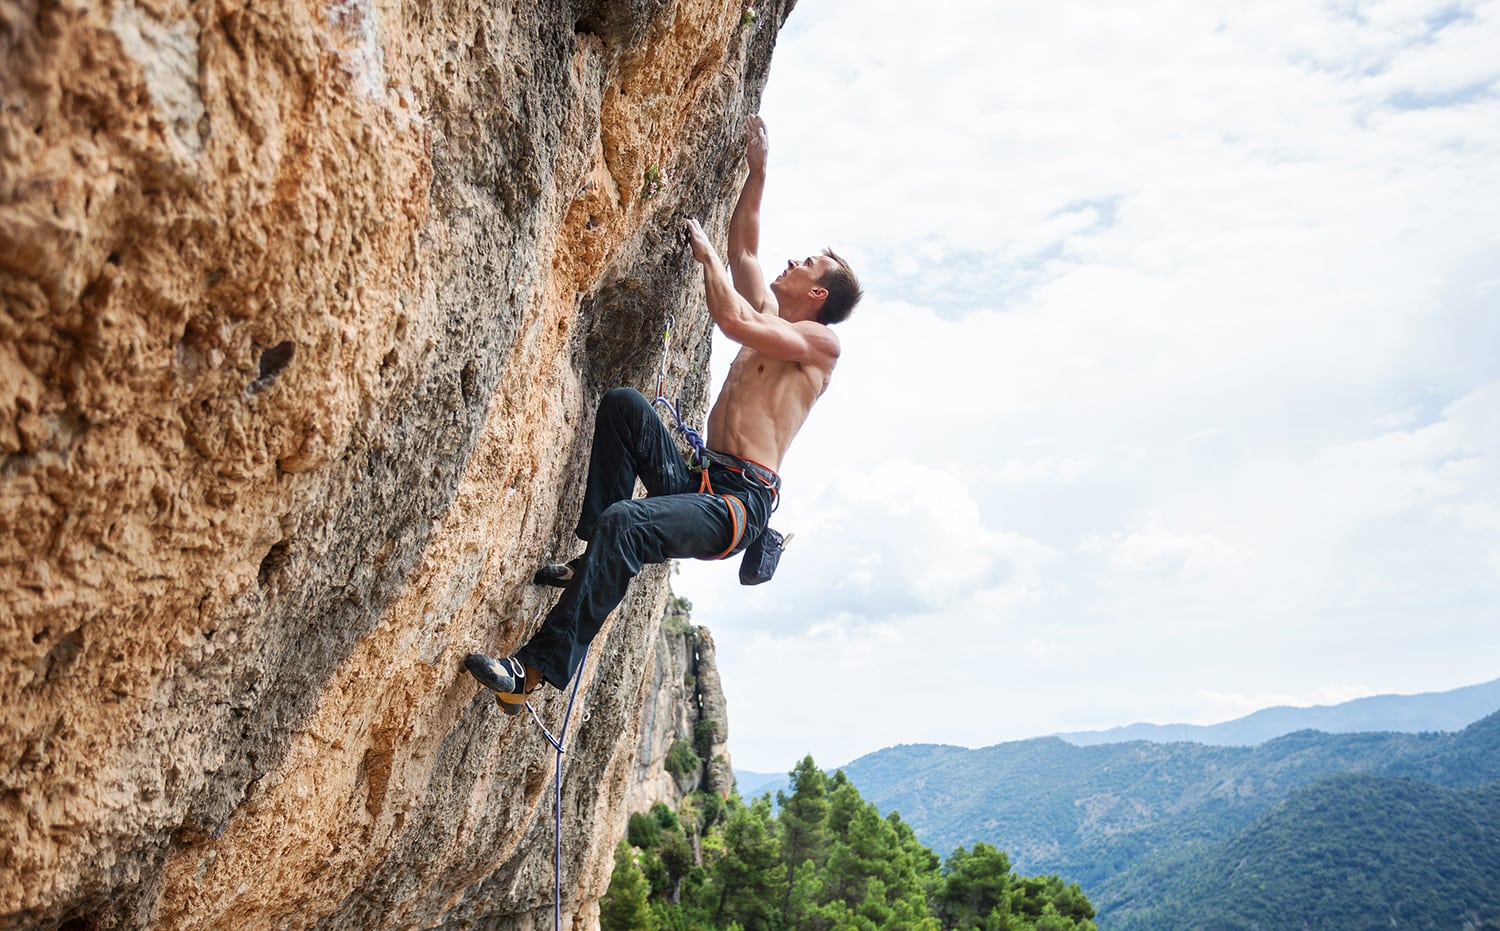 man rock climbing in jeans